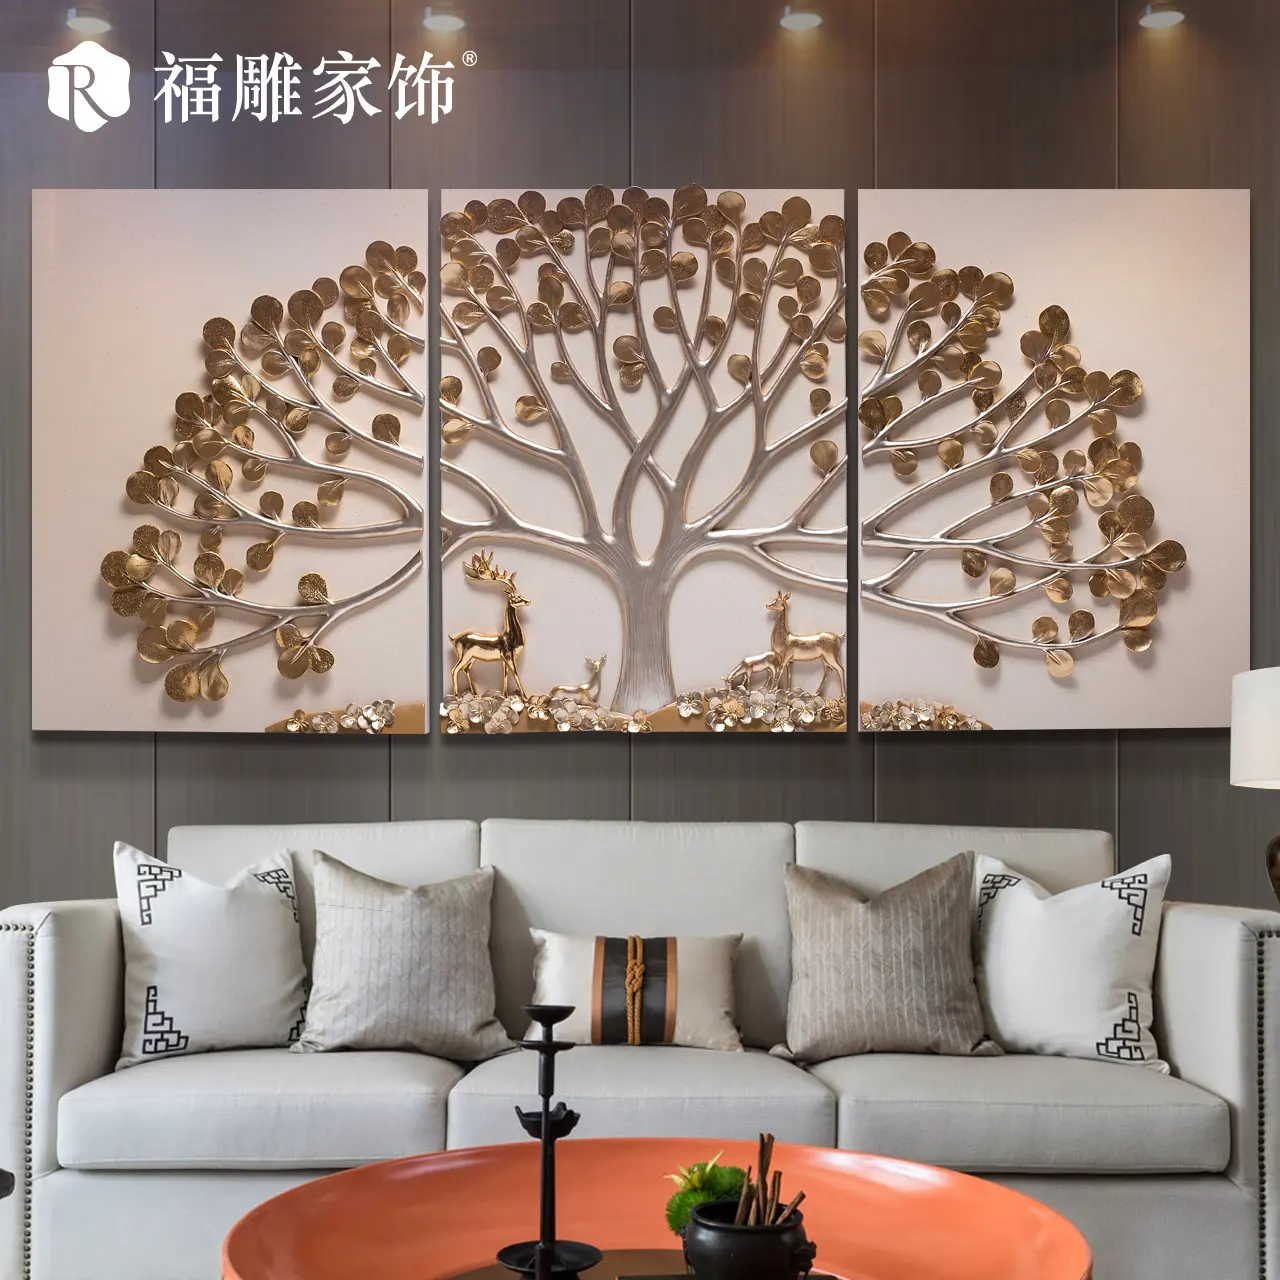 Relife木の絵画樹脂豪華な壁の装飾3パネル手作りアート壁の絵画